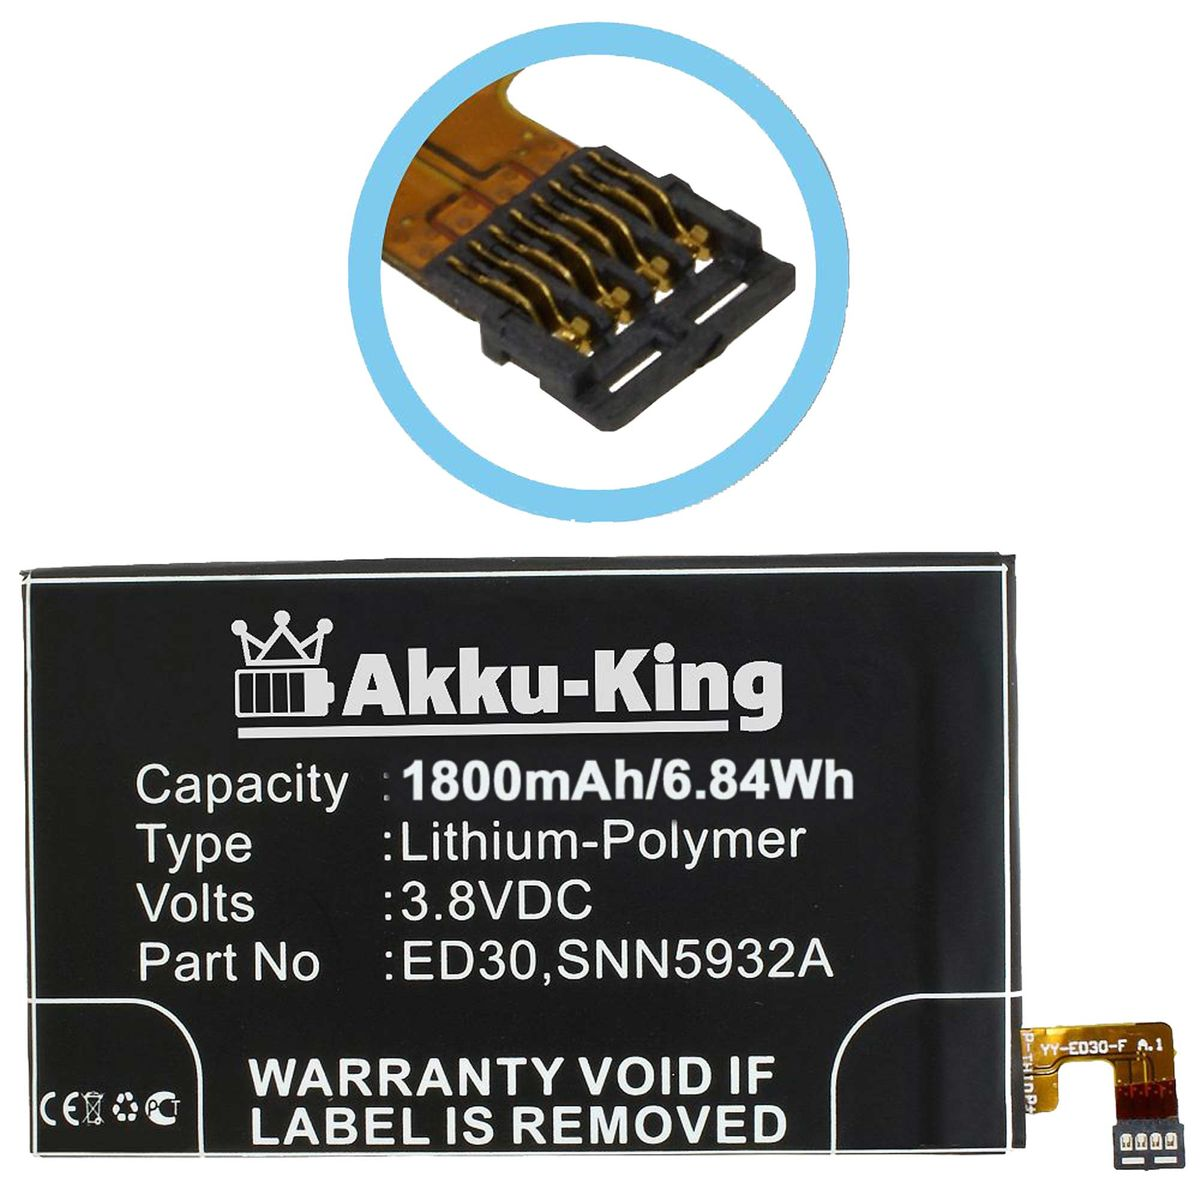 AKKU-KING Akku kompatibel mit 1800mAh Handy-Akku, 3.8 Volt, ED30 Motorola Li-Polymer